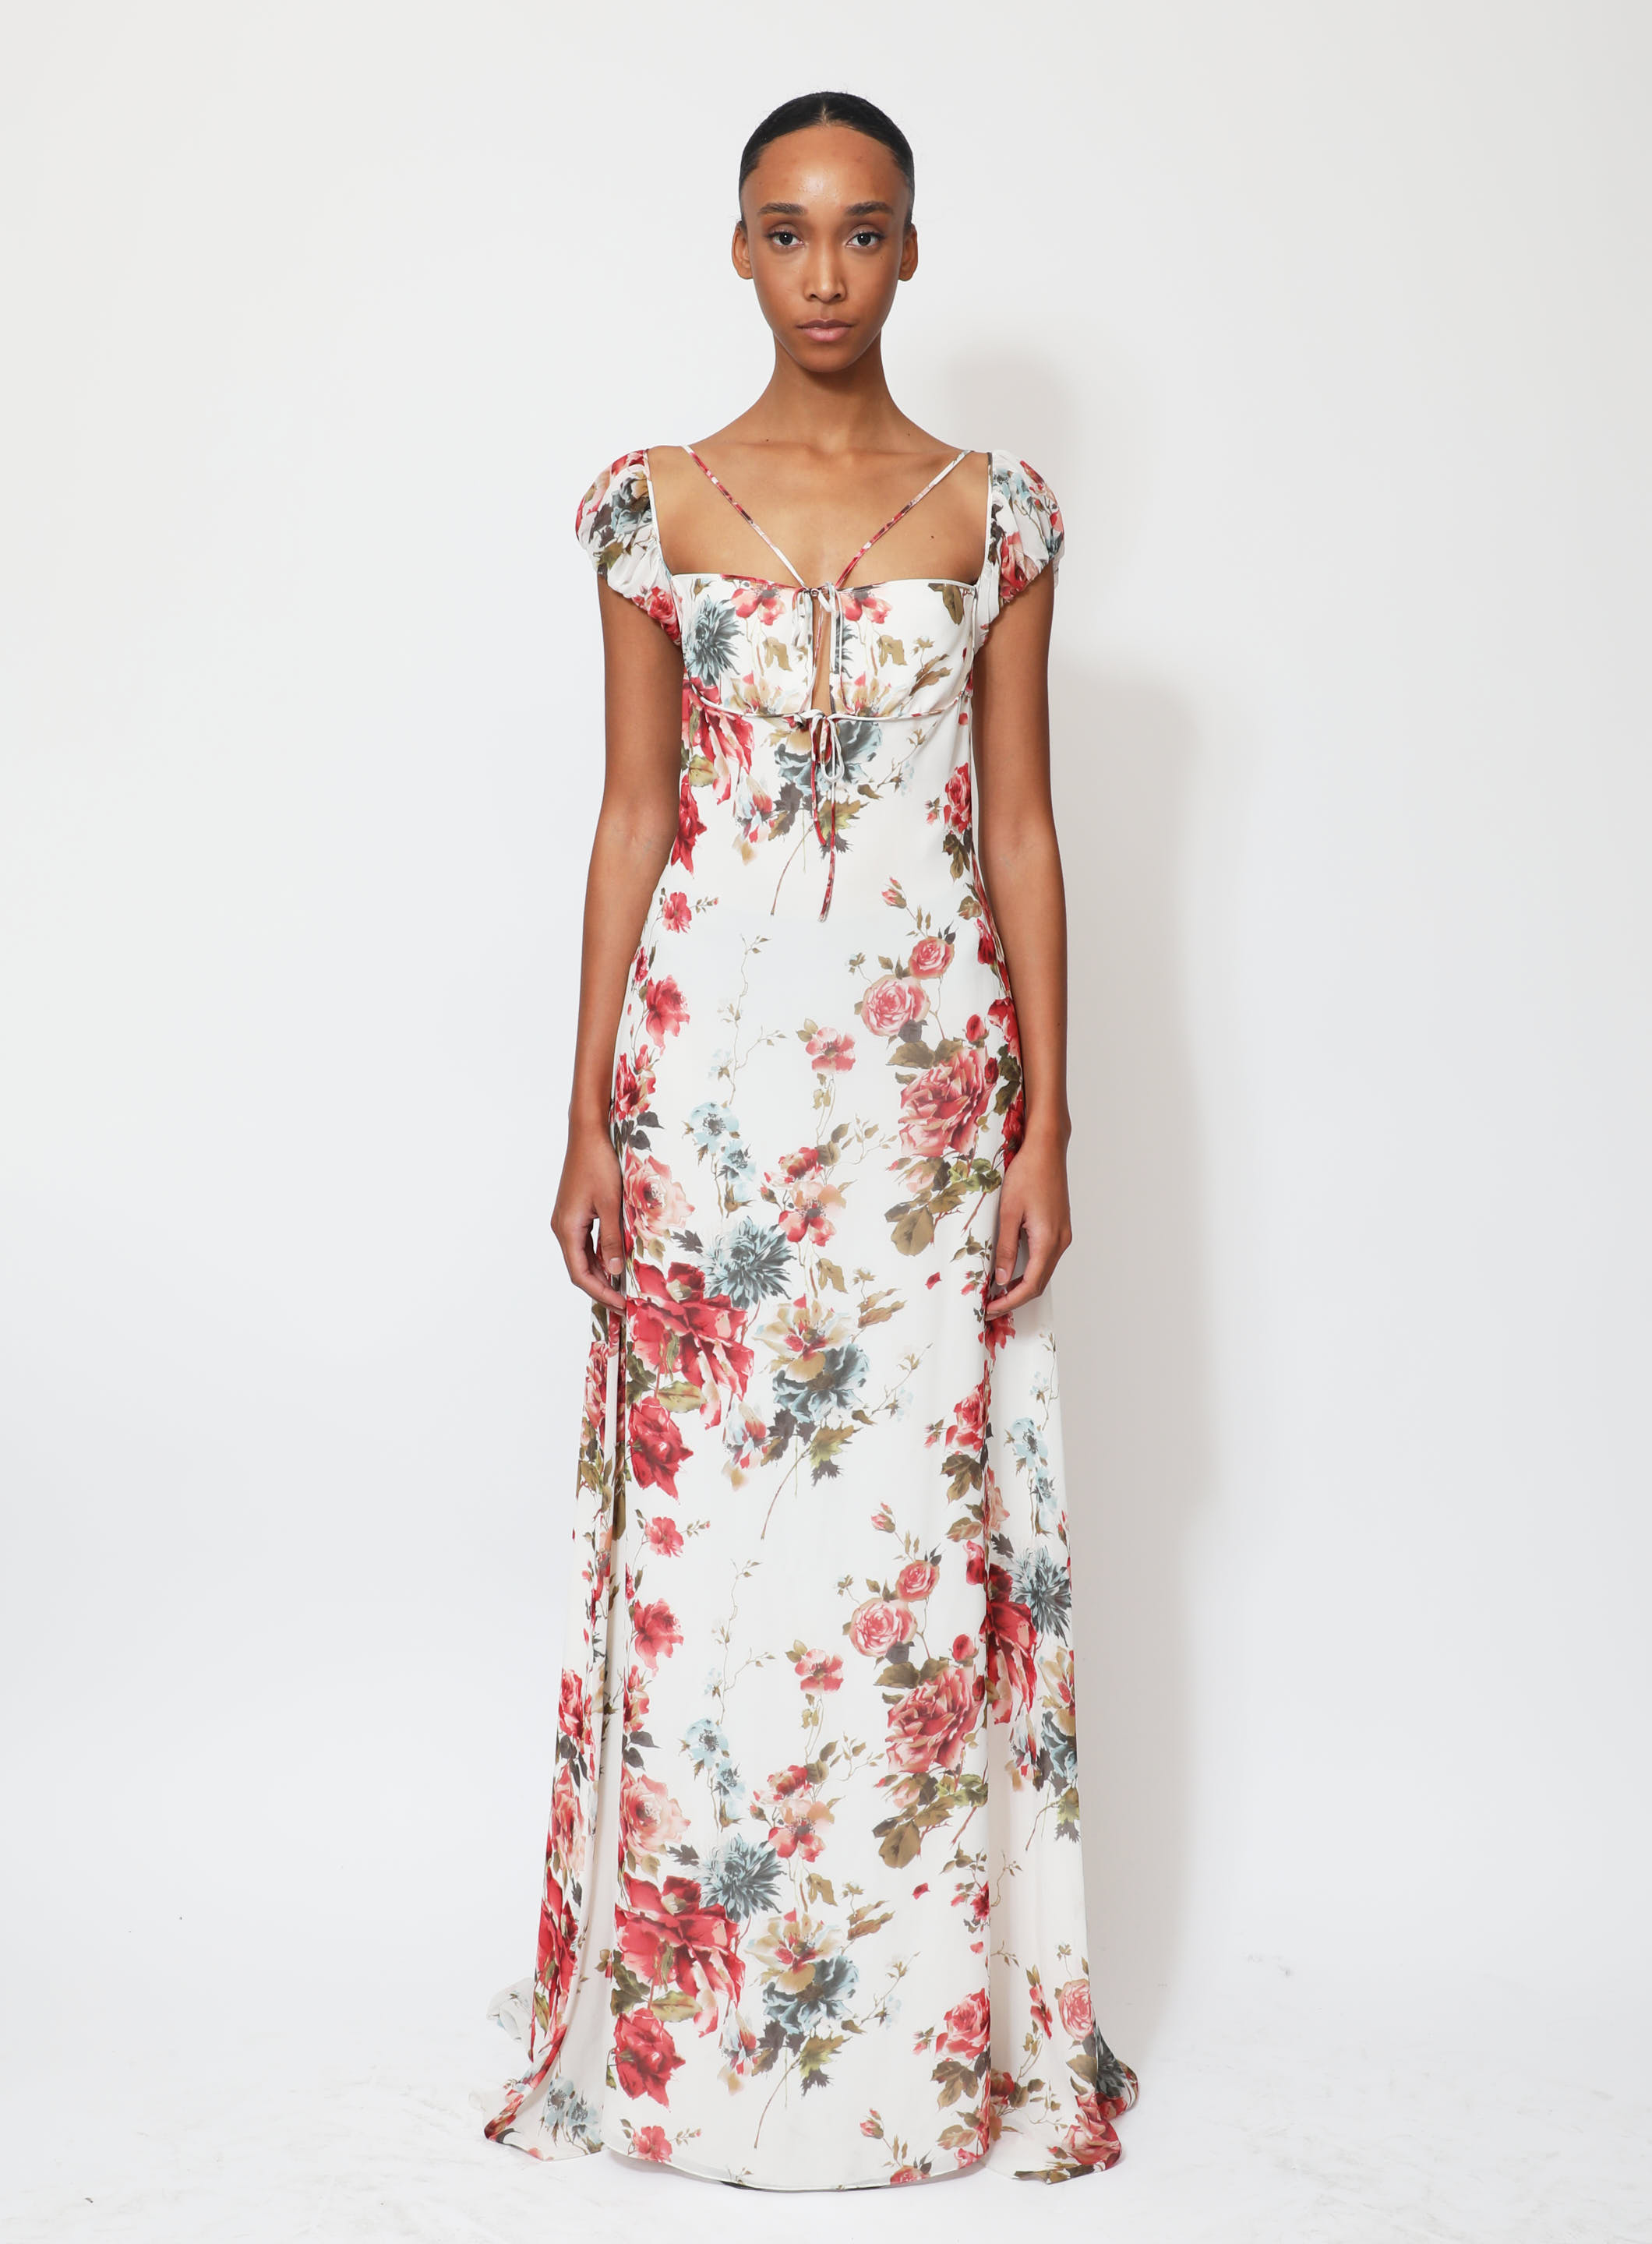 S/S 2018 Floral Print Pleated Dress, Authentic & Vintage